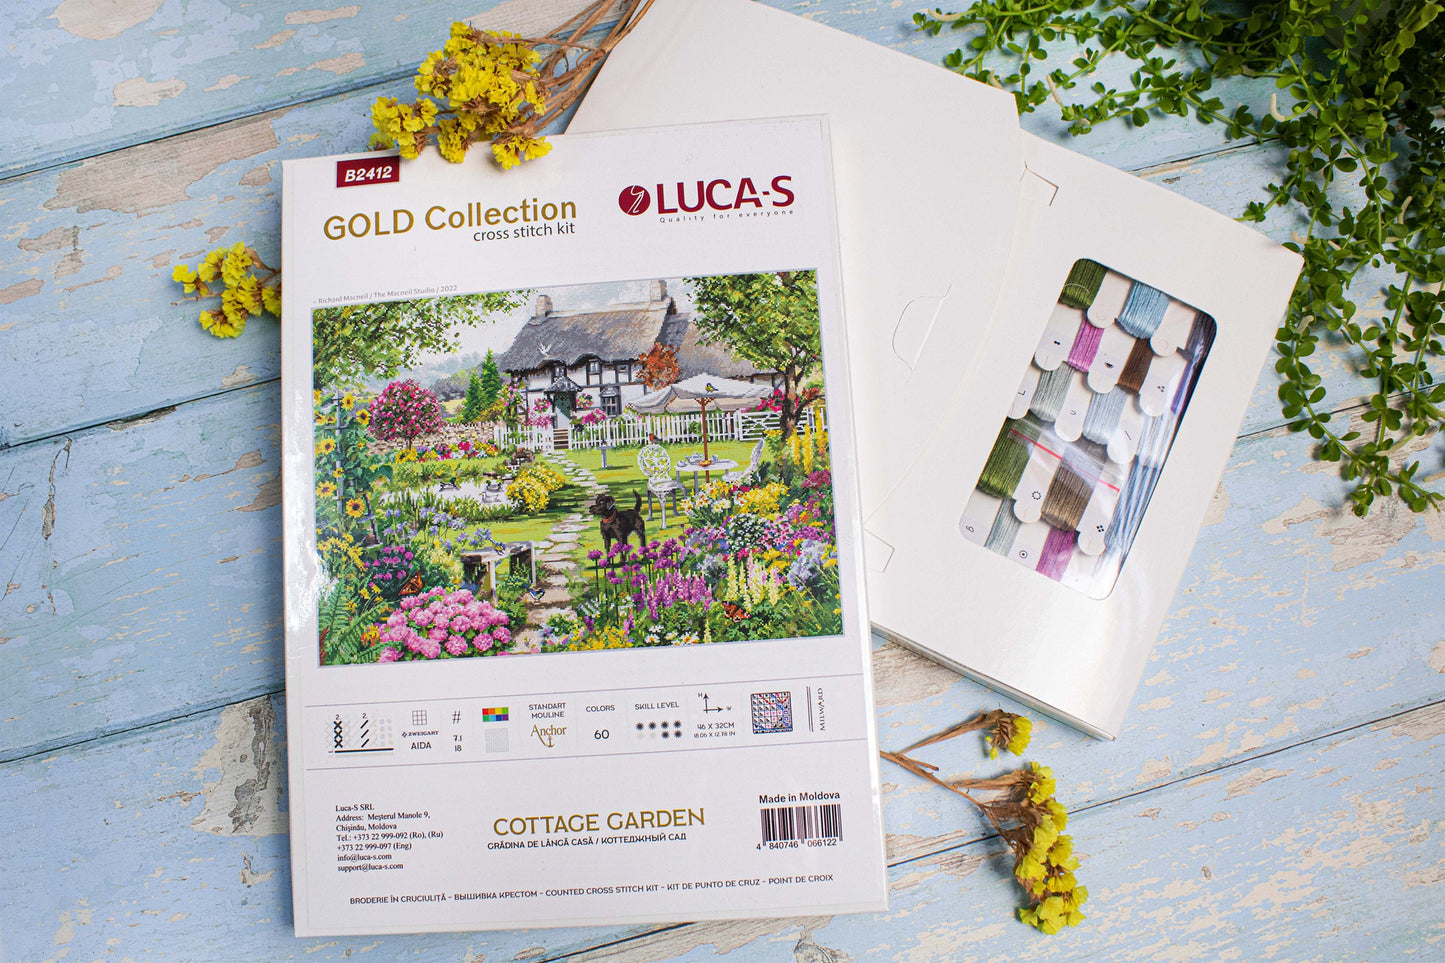 Cross Stitch Kit Luca-S GOLD - Cottage Garden, B2412